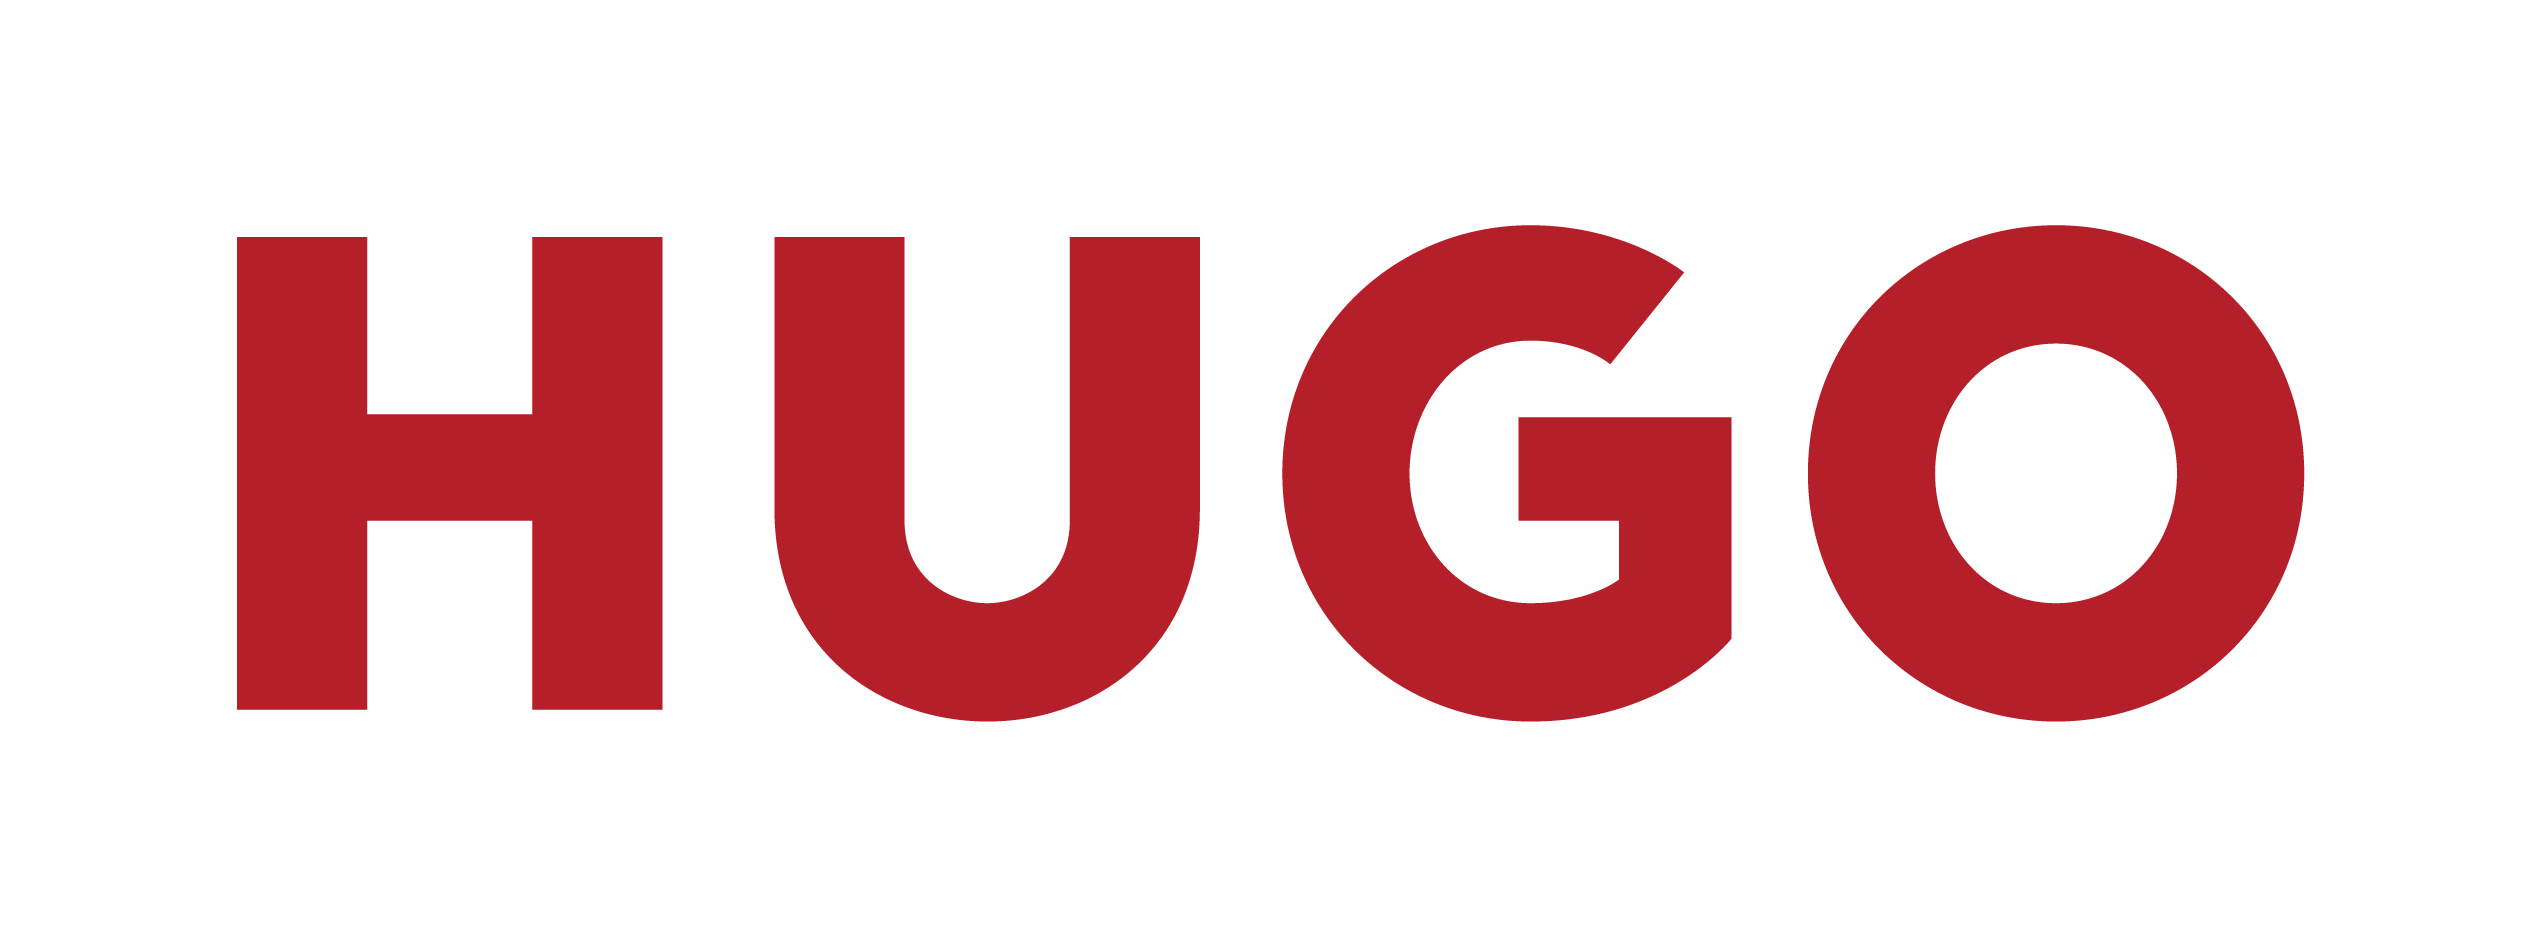 HUGO_LOGO_red_RGB